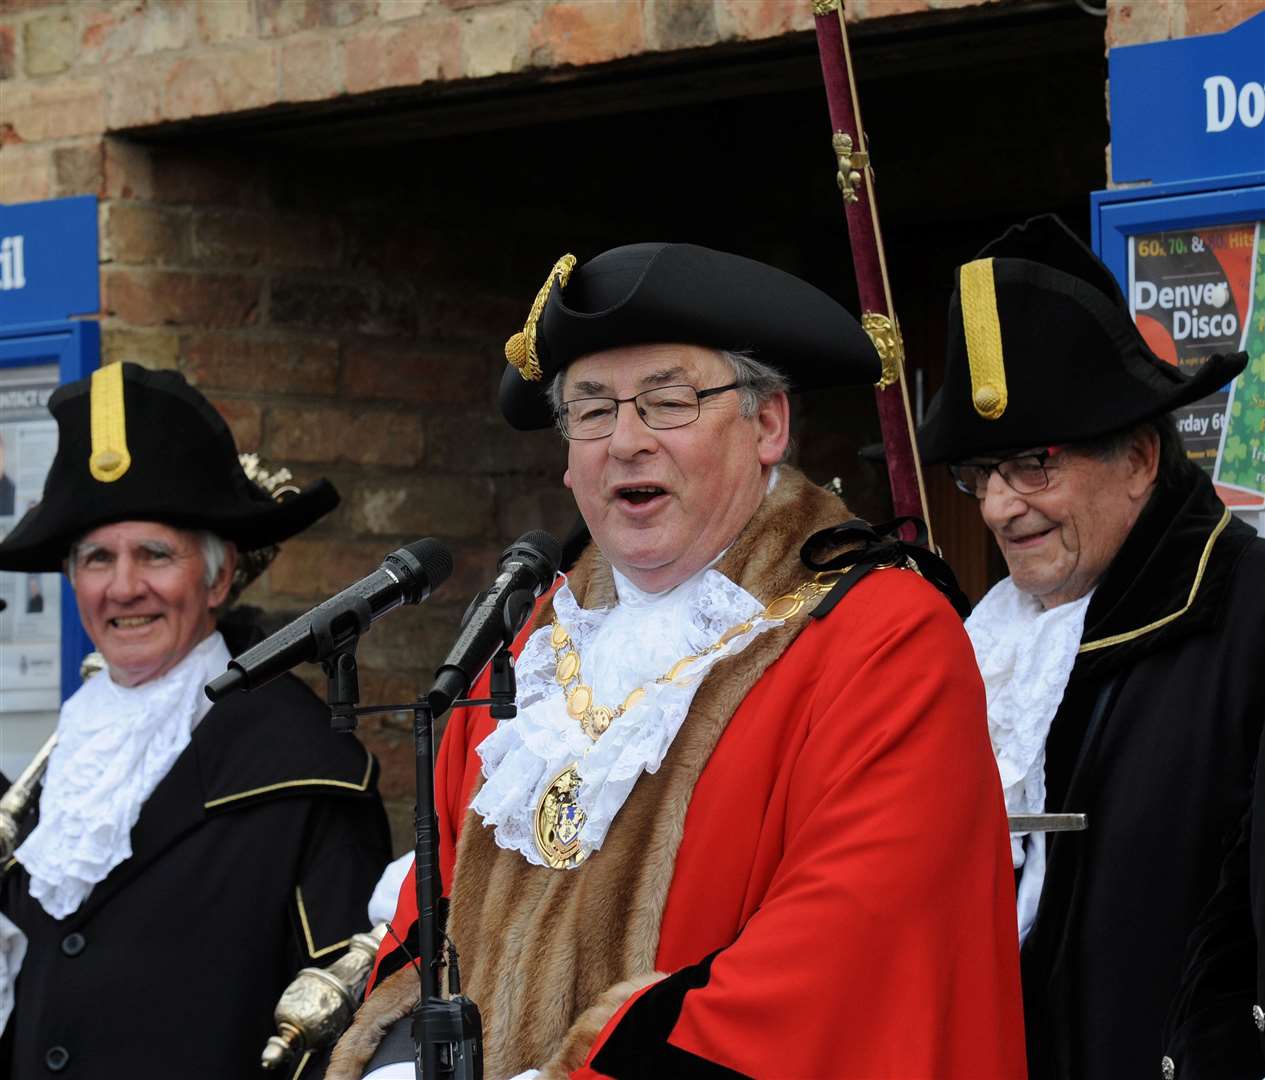 Borough Mayor Nick Daubney pictured at St Winnold's Parade in Downham in 2019